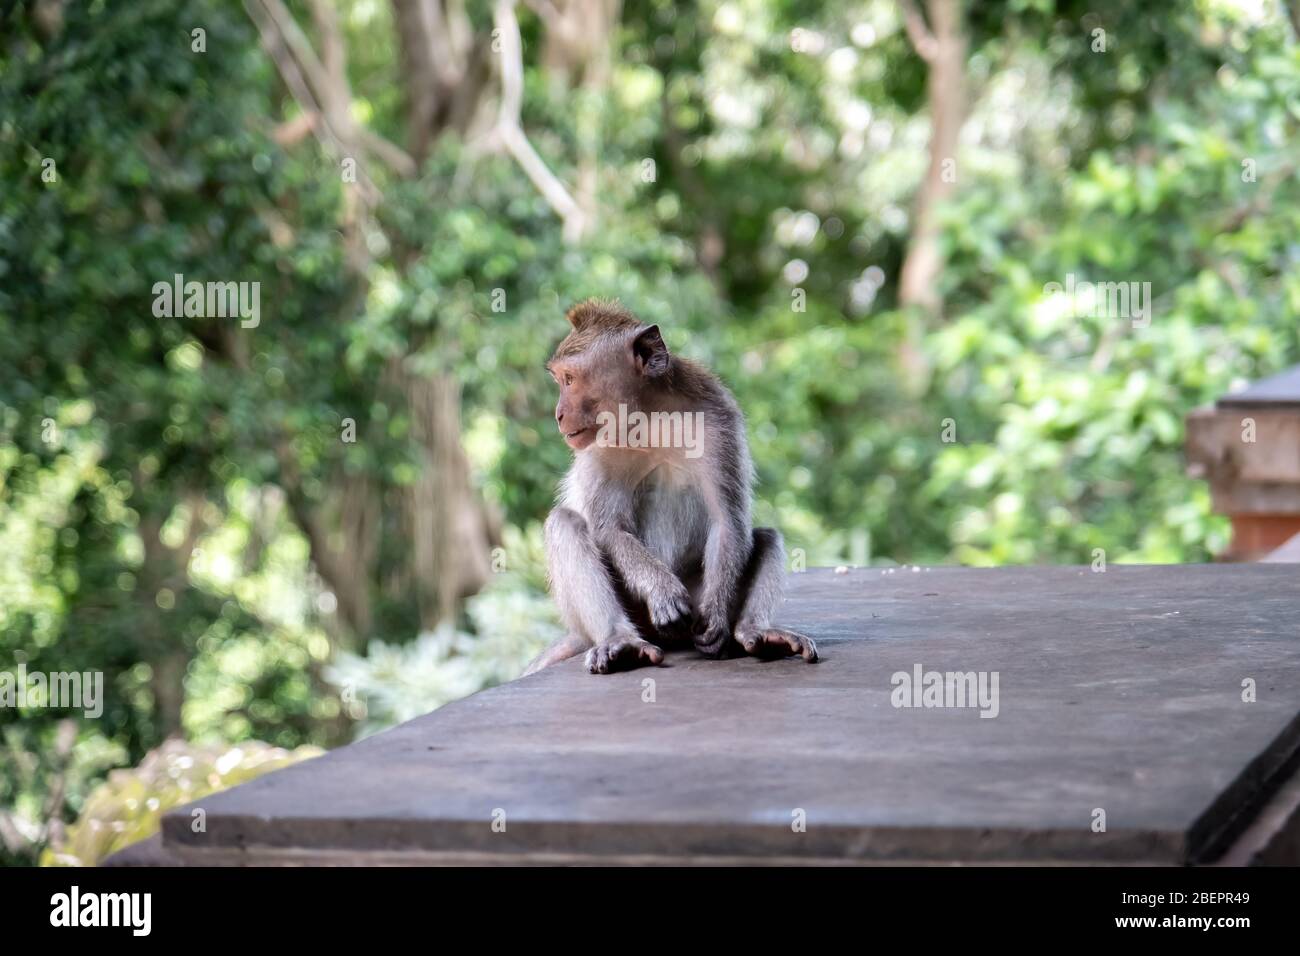 Cangrejo comiendo monos macacos quitando liendres o piojos de su mono, conocido como ' Macaca fascicularis ' Foto de stock